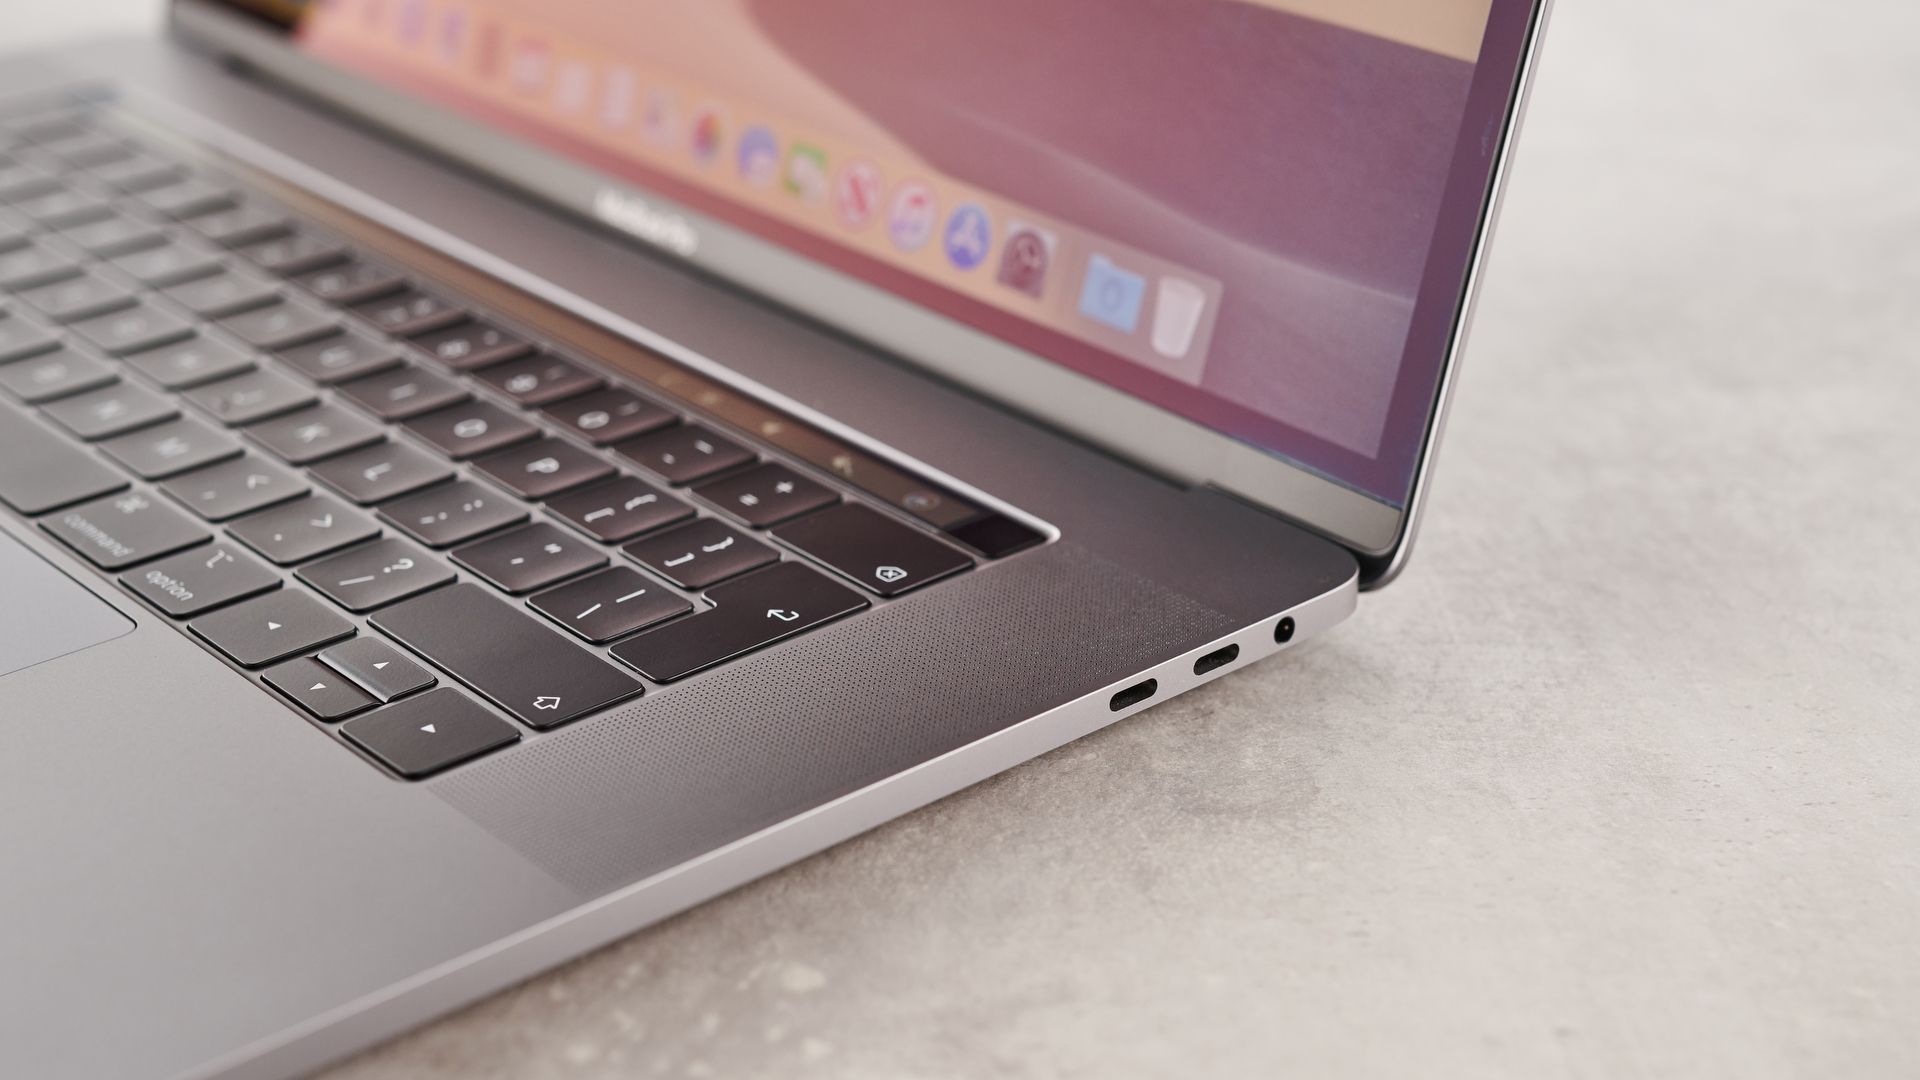 macbook pro 2019 16 inch refurbished